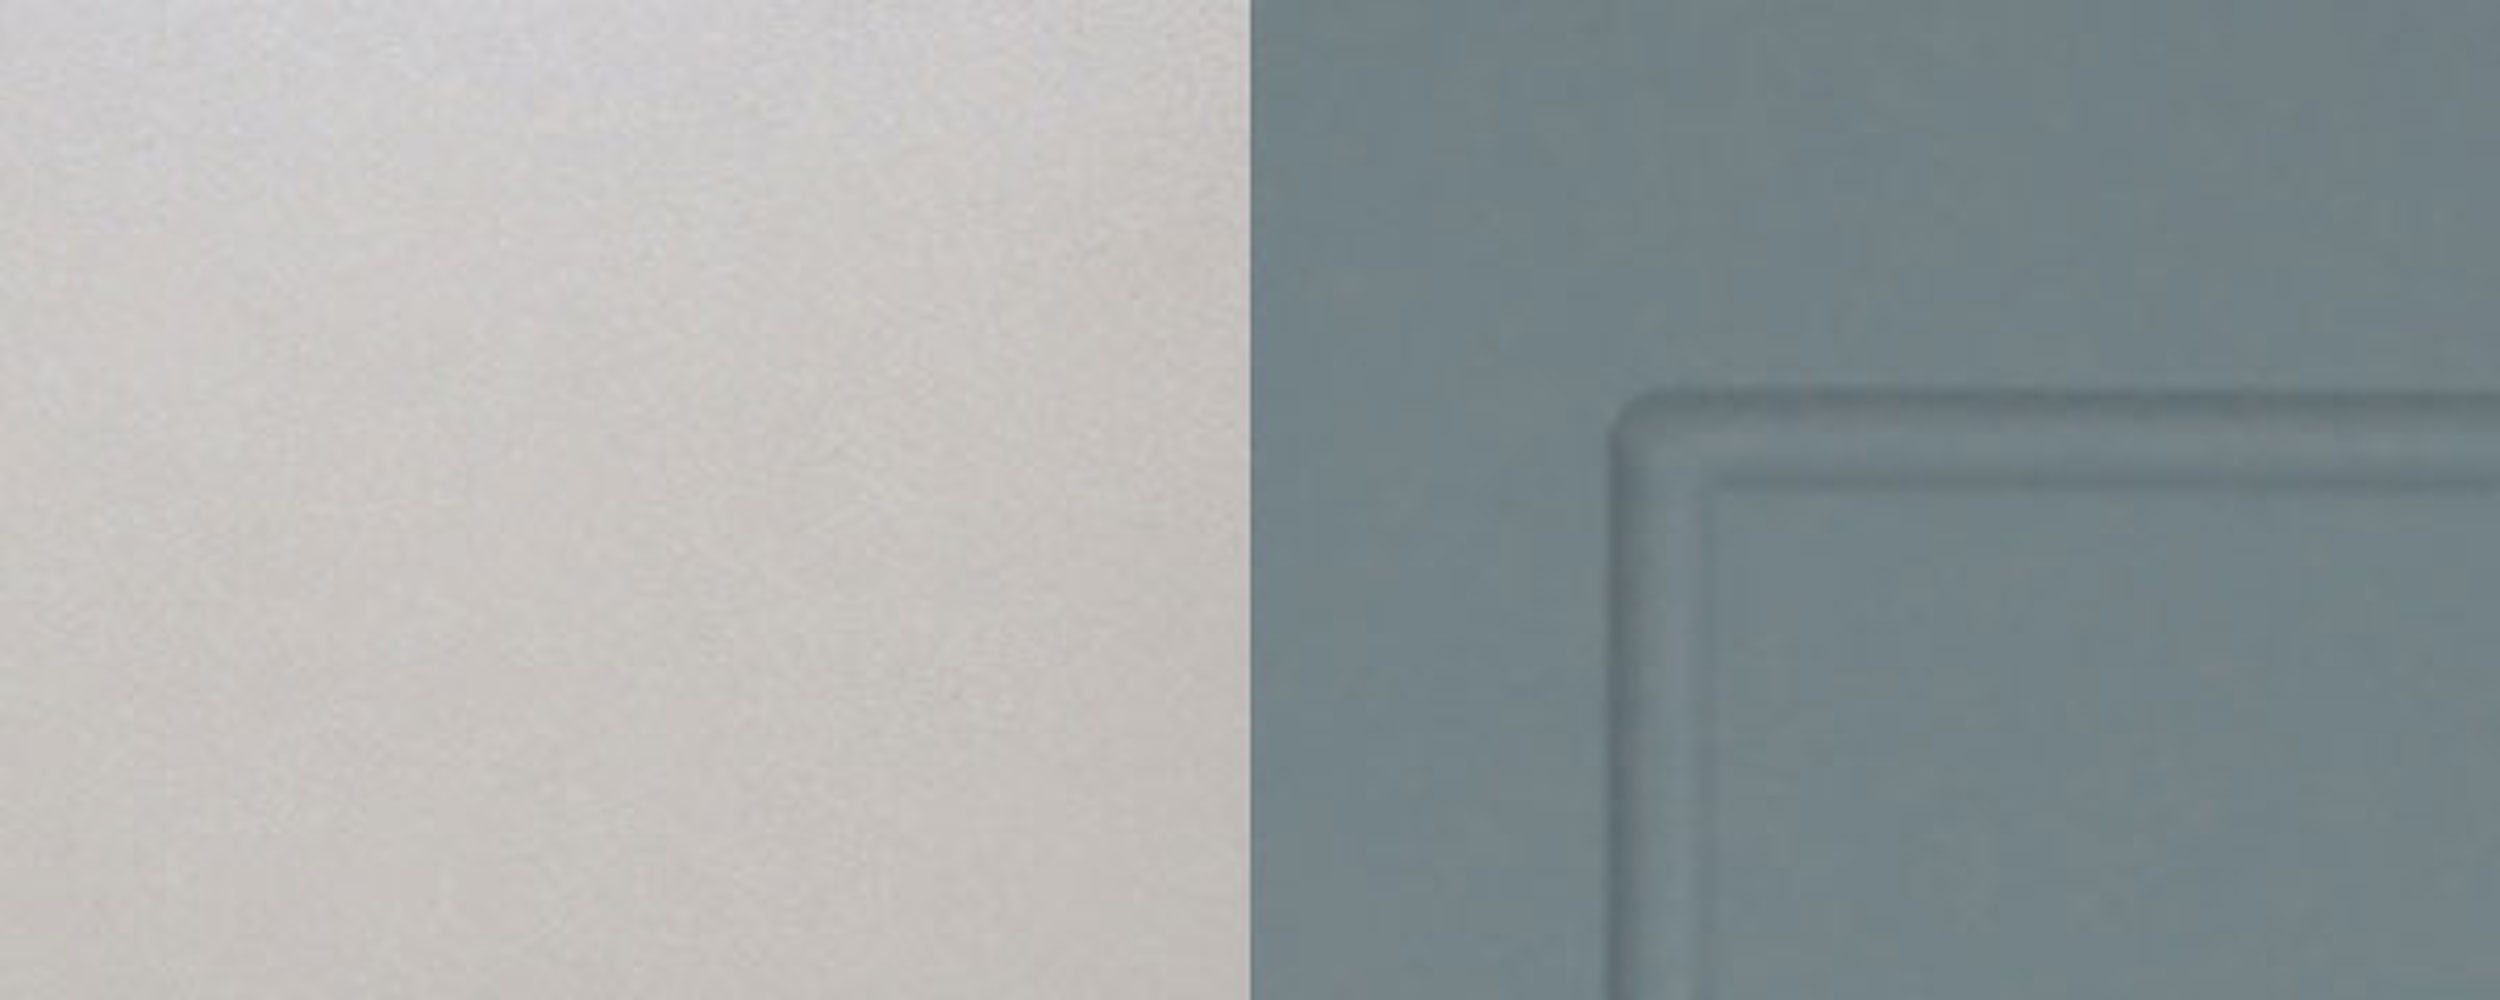 Feldmann-Wohnen Klapphängeschrank 60cm (Milchglaseinsatz) wählbar Klapptür 1 Front- (Kvantum) matt & mint Korpusfarbe Kvantum